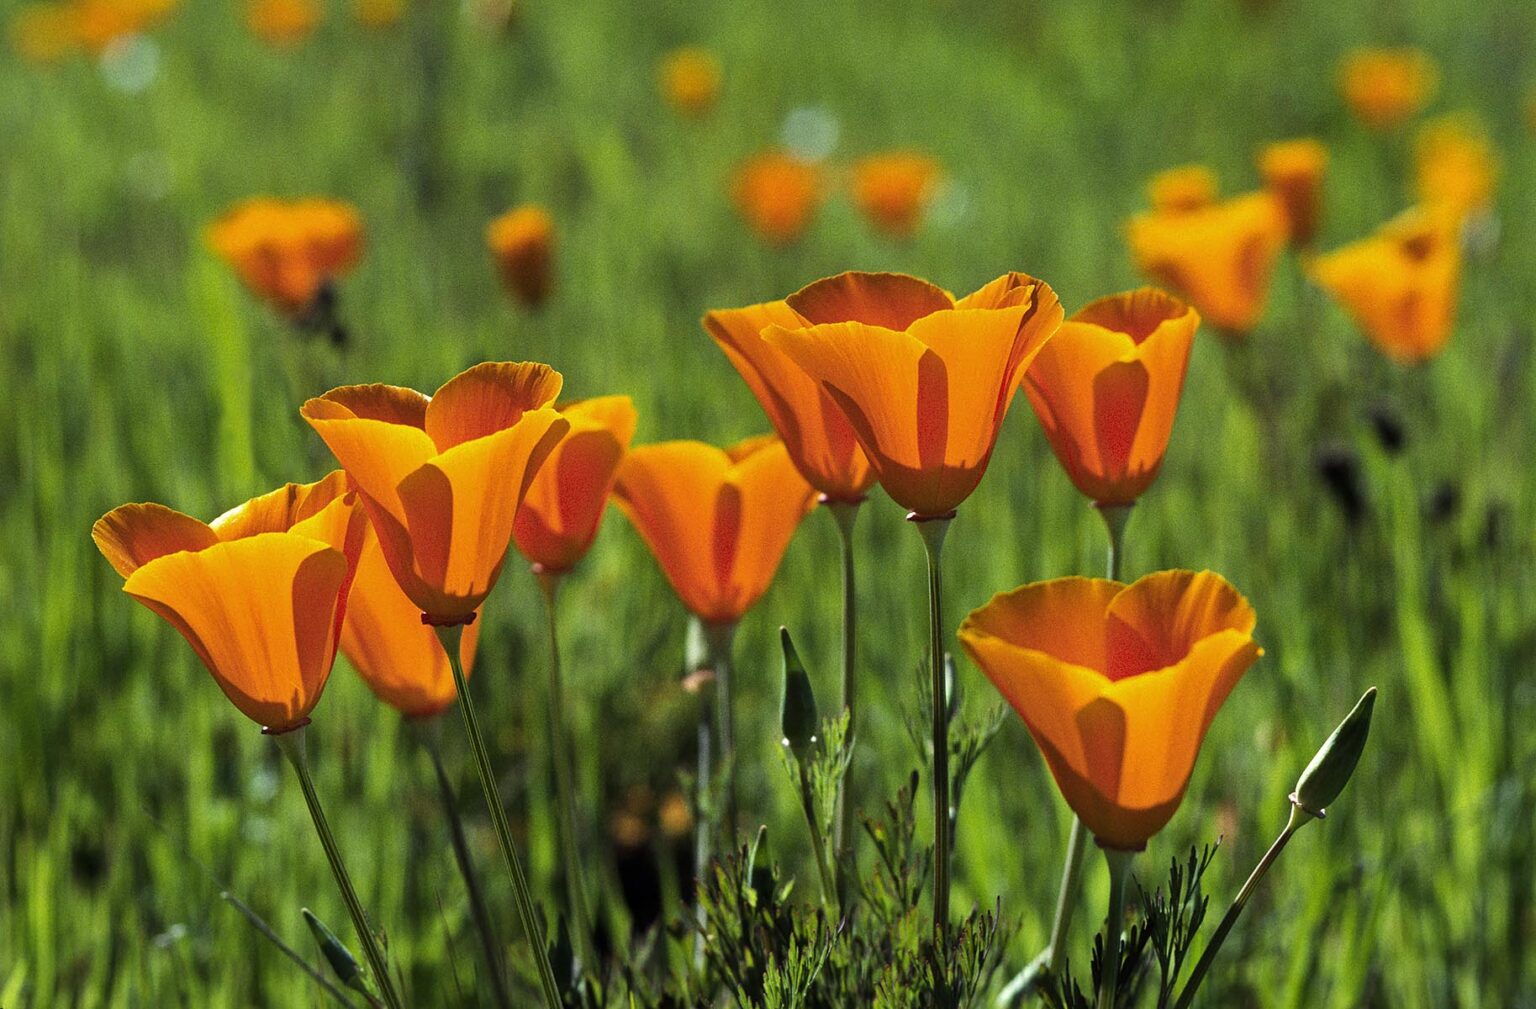 CALIFORNIA POPPY PLANTS (Eschscholzia californica) in bloom - MONTEREY COUNTY, CALIFORNIA